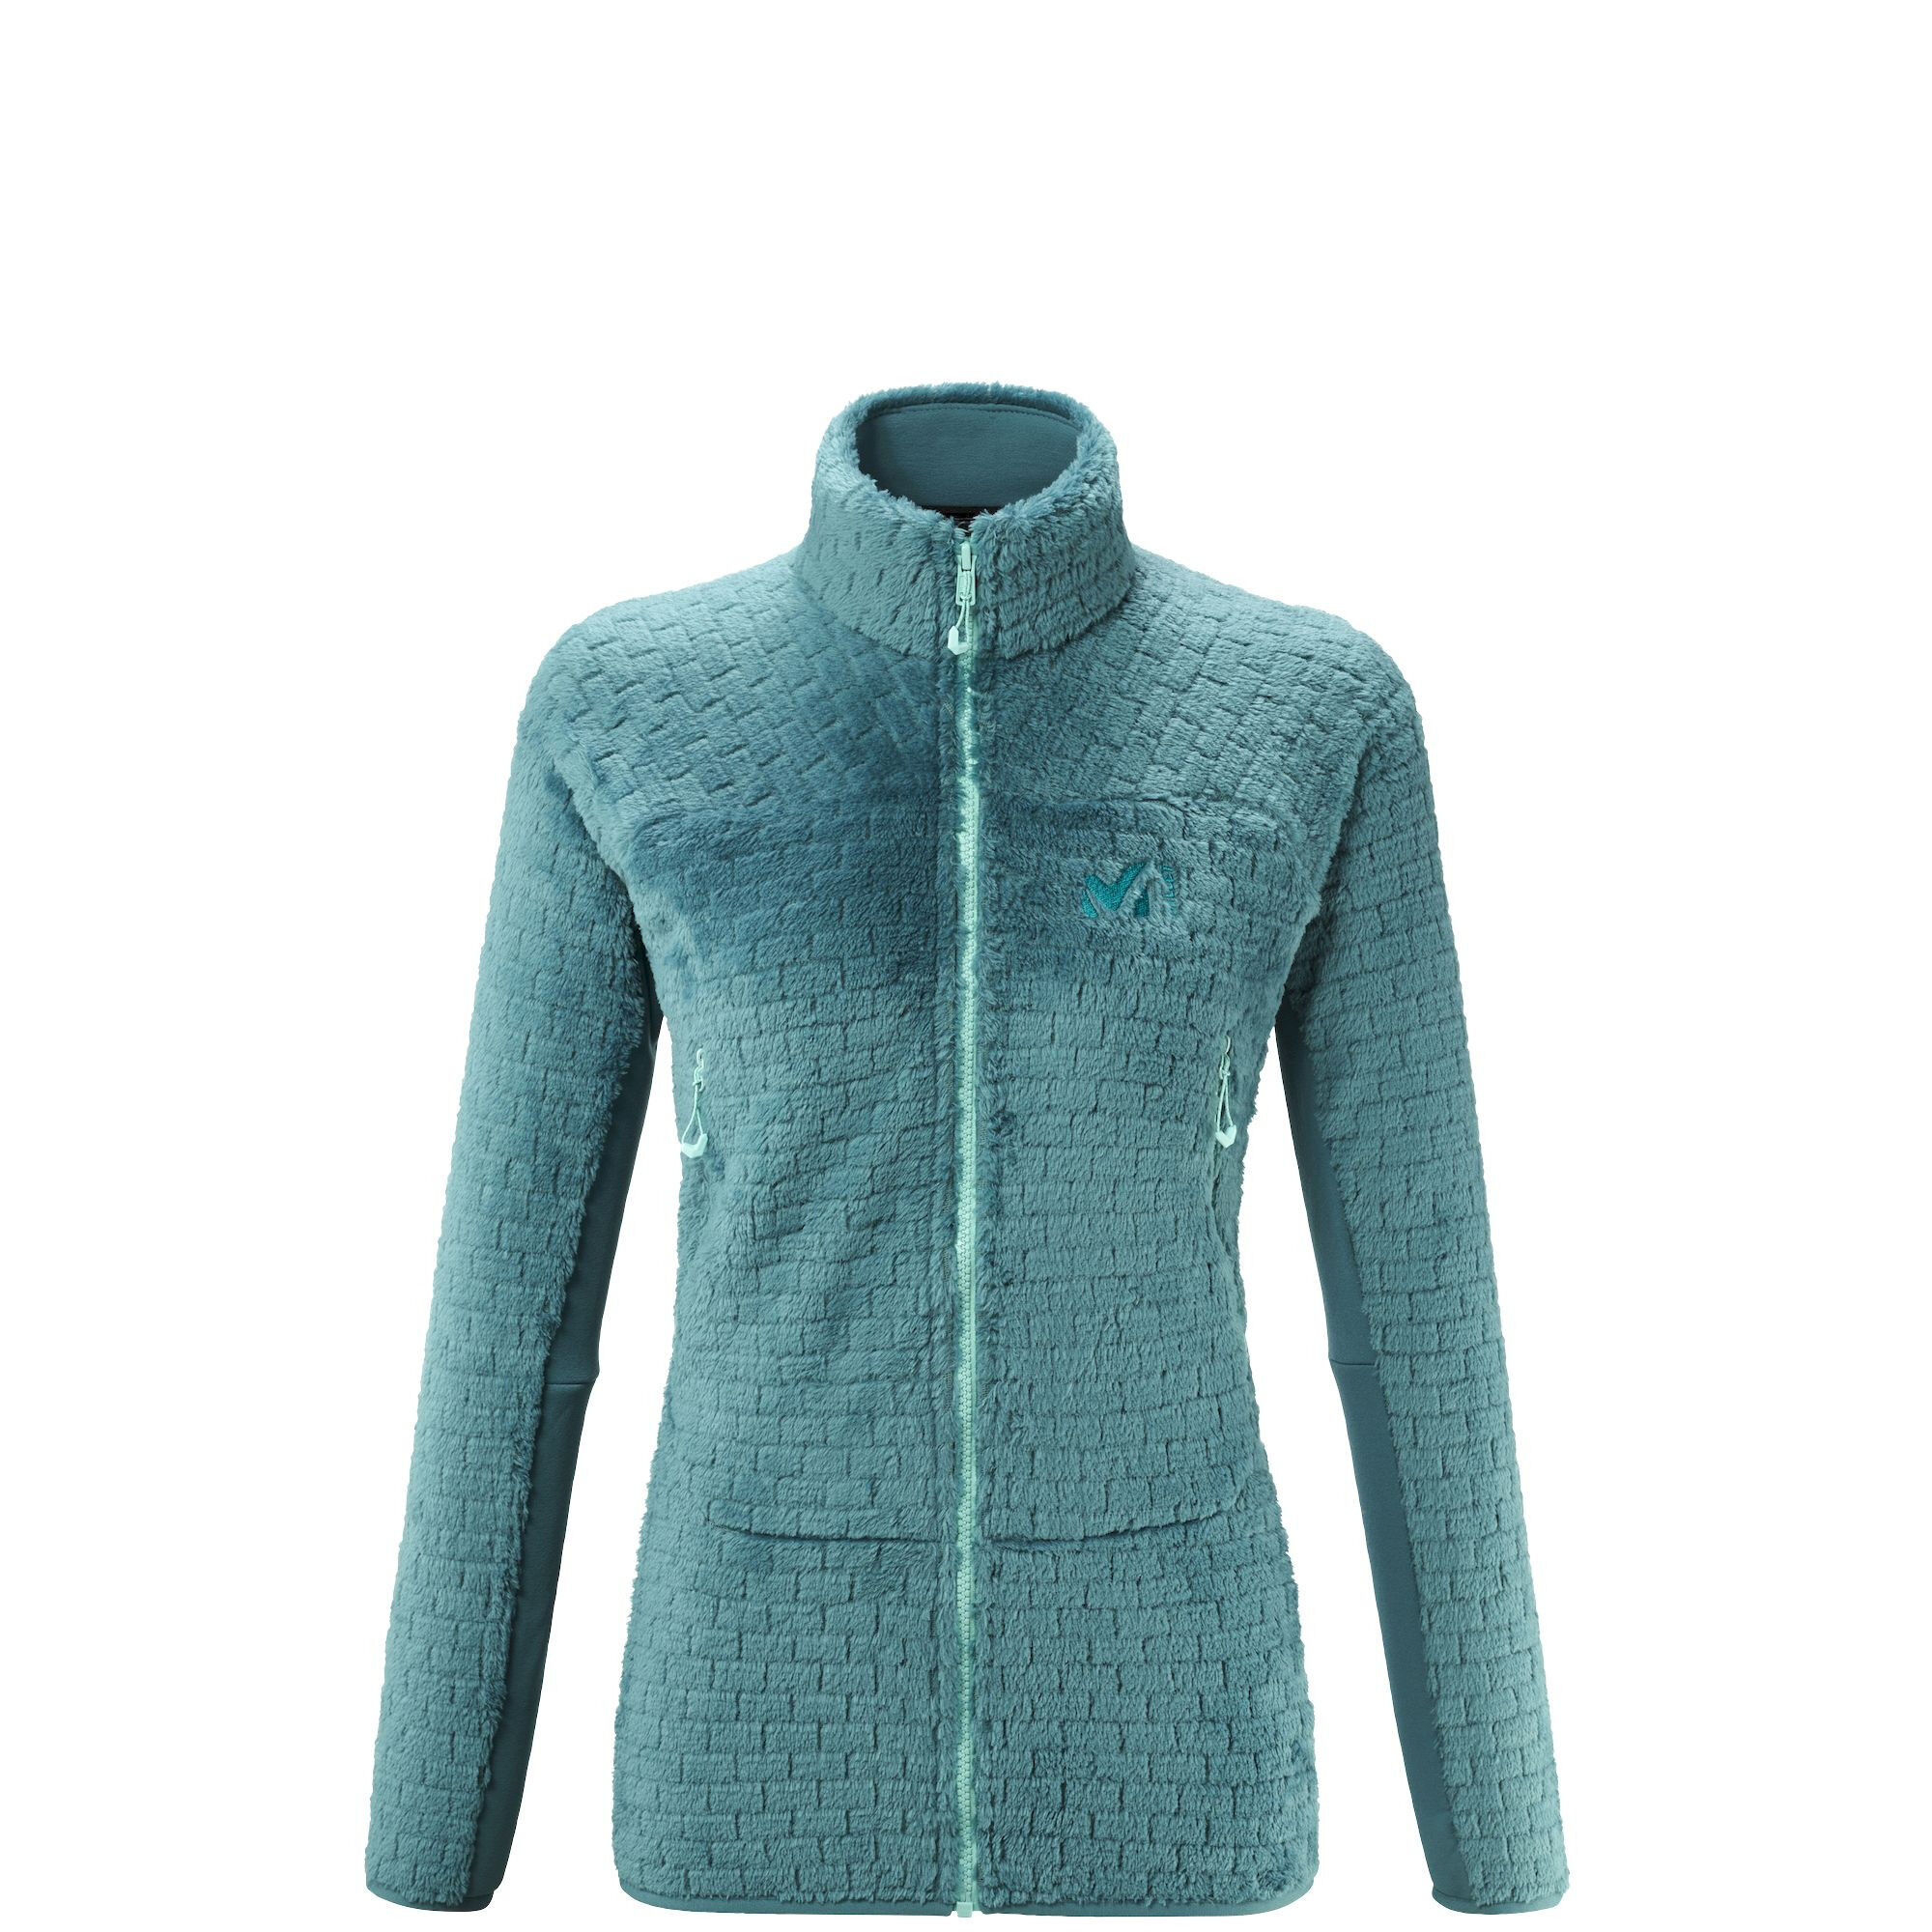 Millet Fusion Lines Loft Jacket - Fleece jacket - Women's